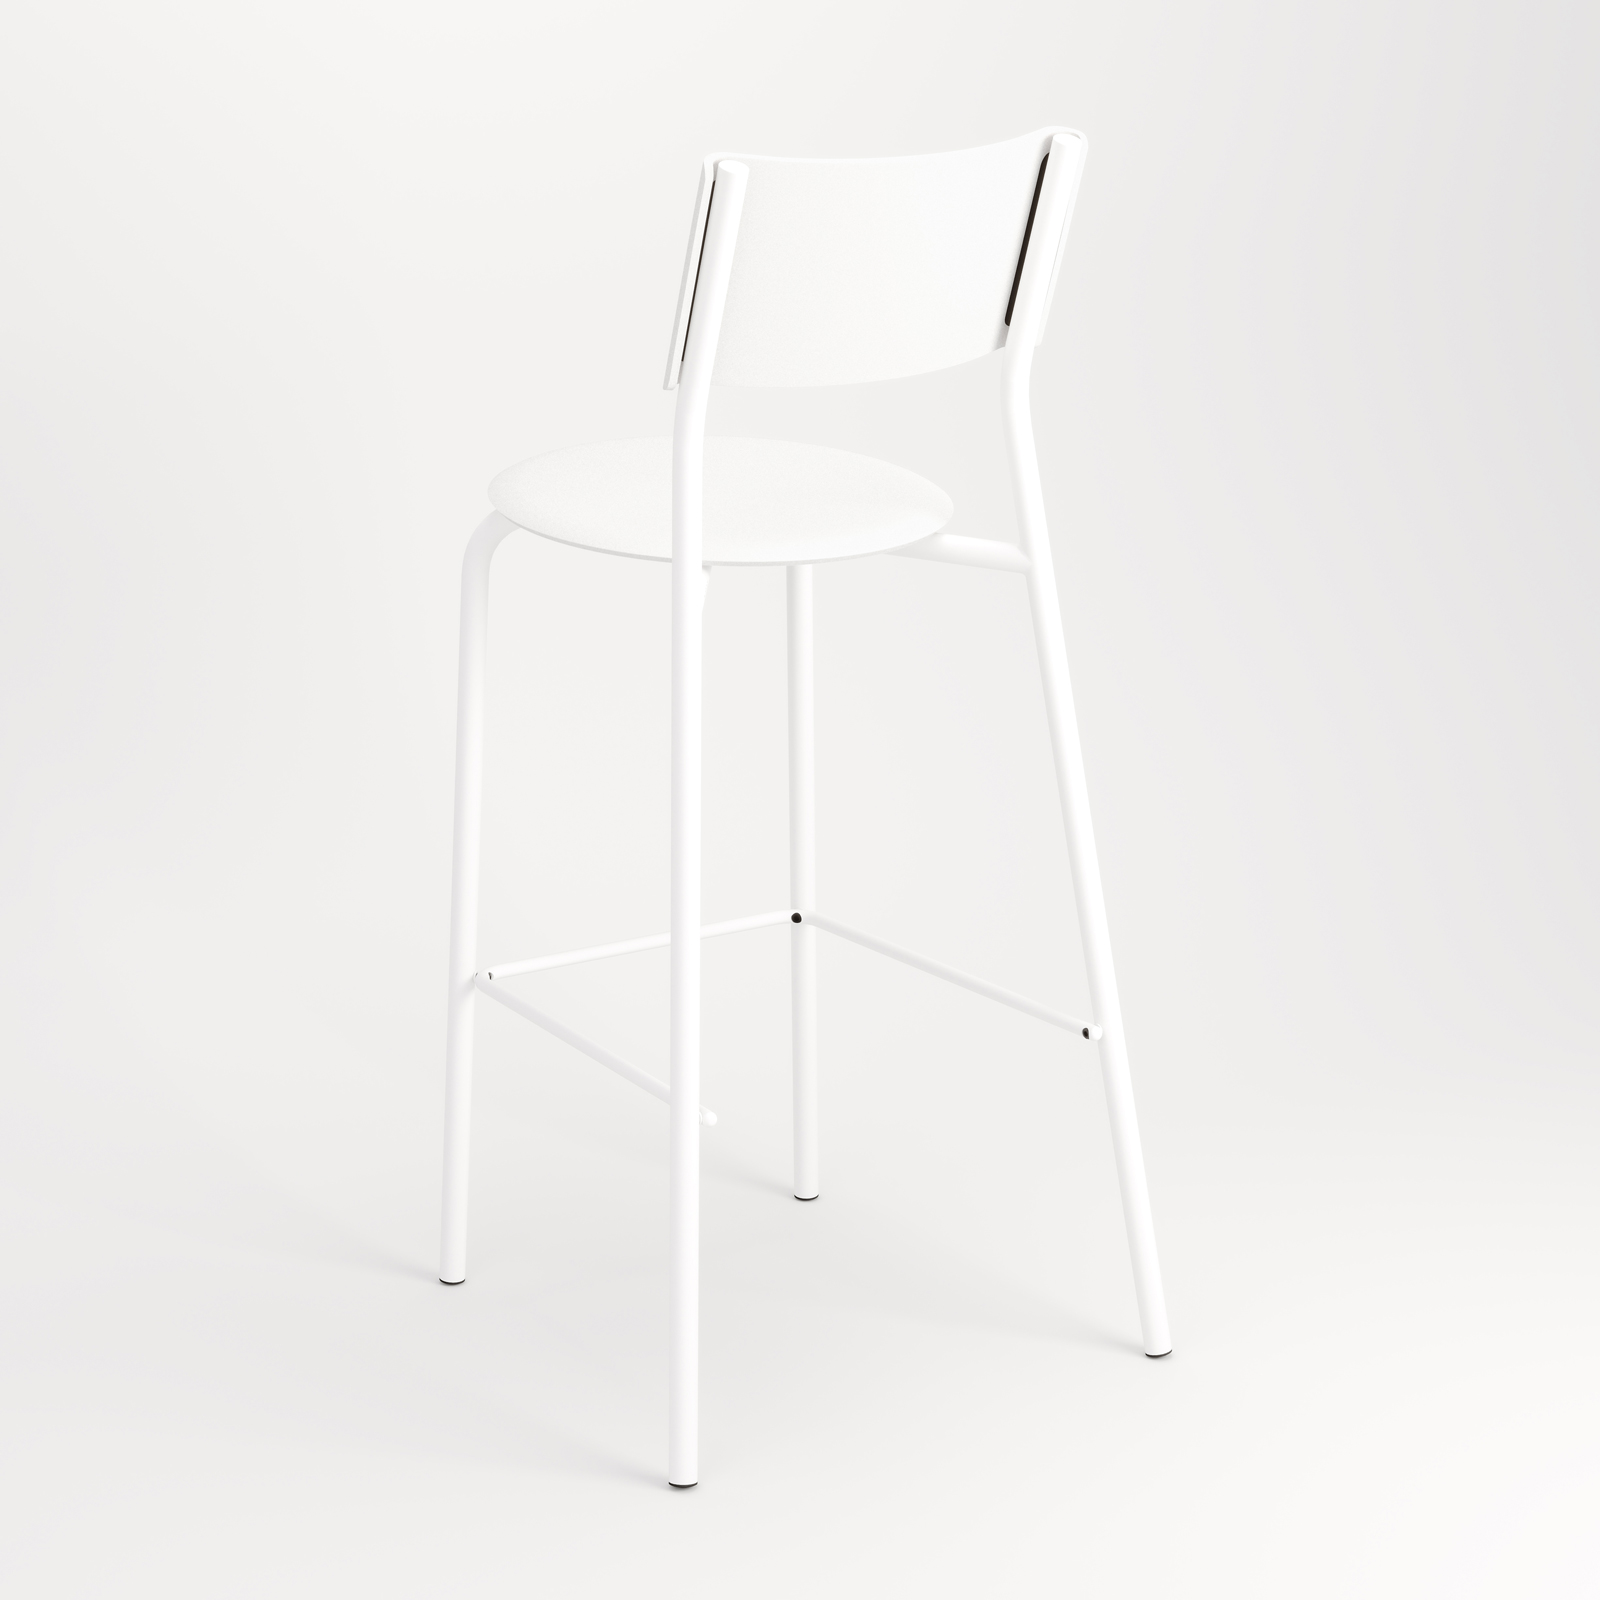 SSDr bar chair - recycled plastic - 75cm